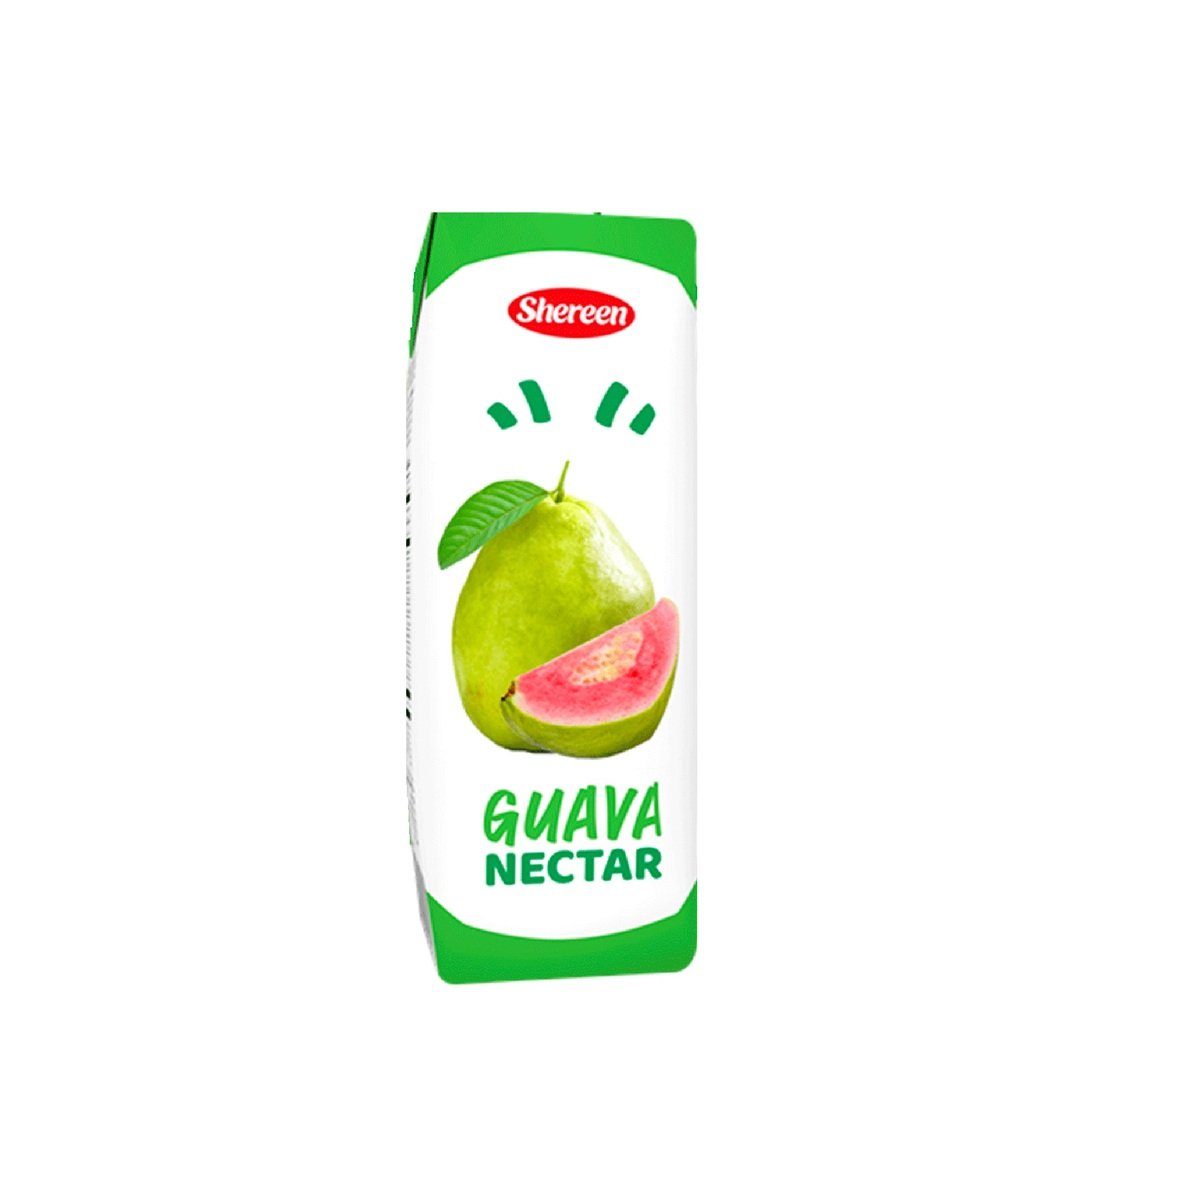 Shereen Guava Nectar Juice Tetra Pack 6 x 250 ml